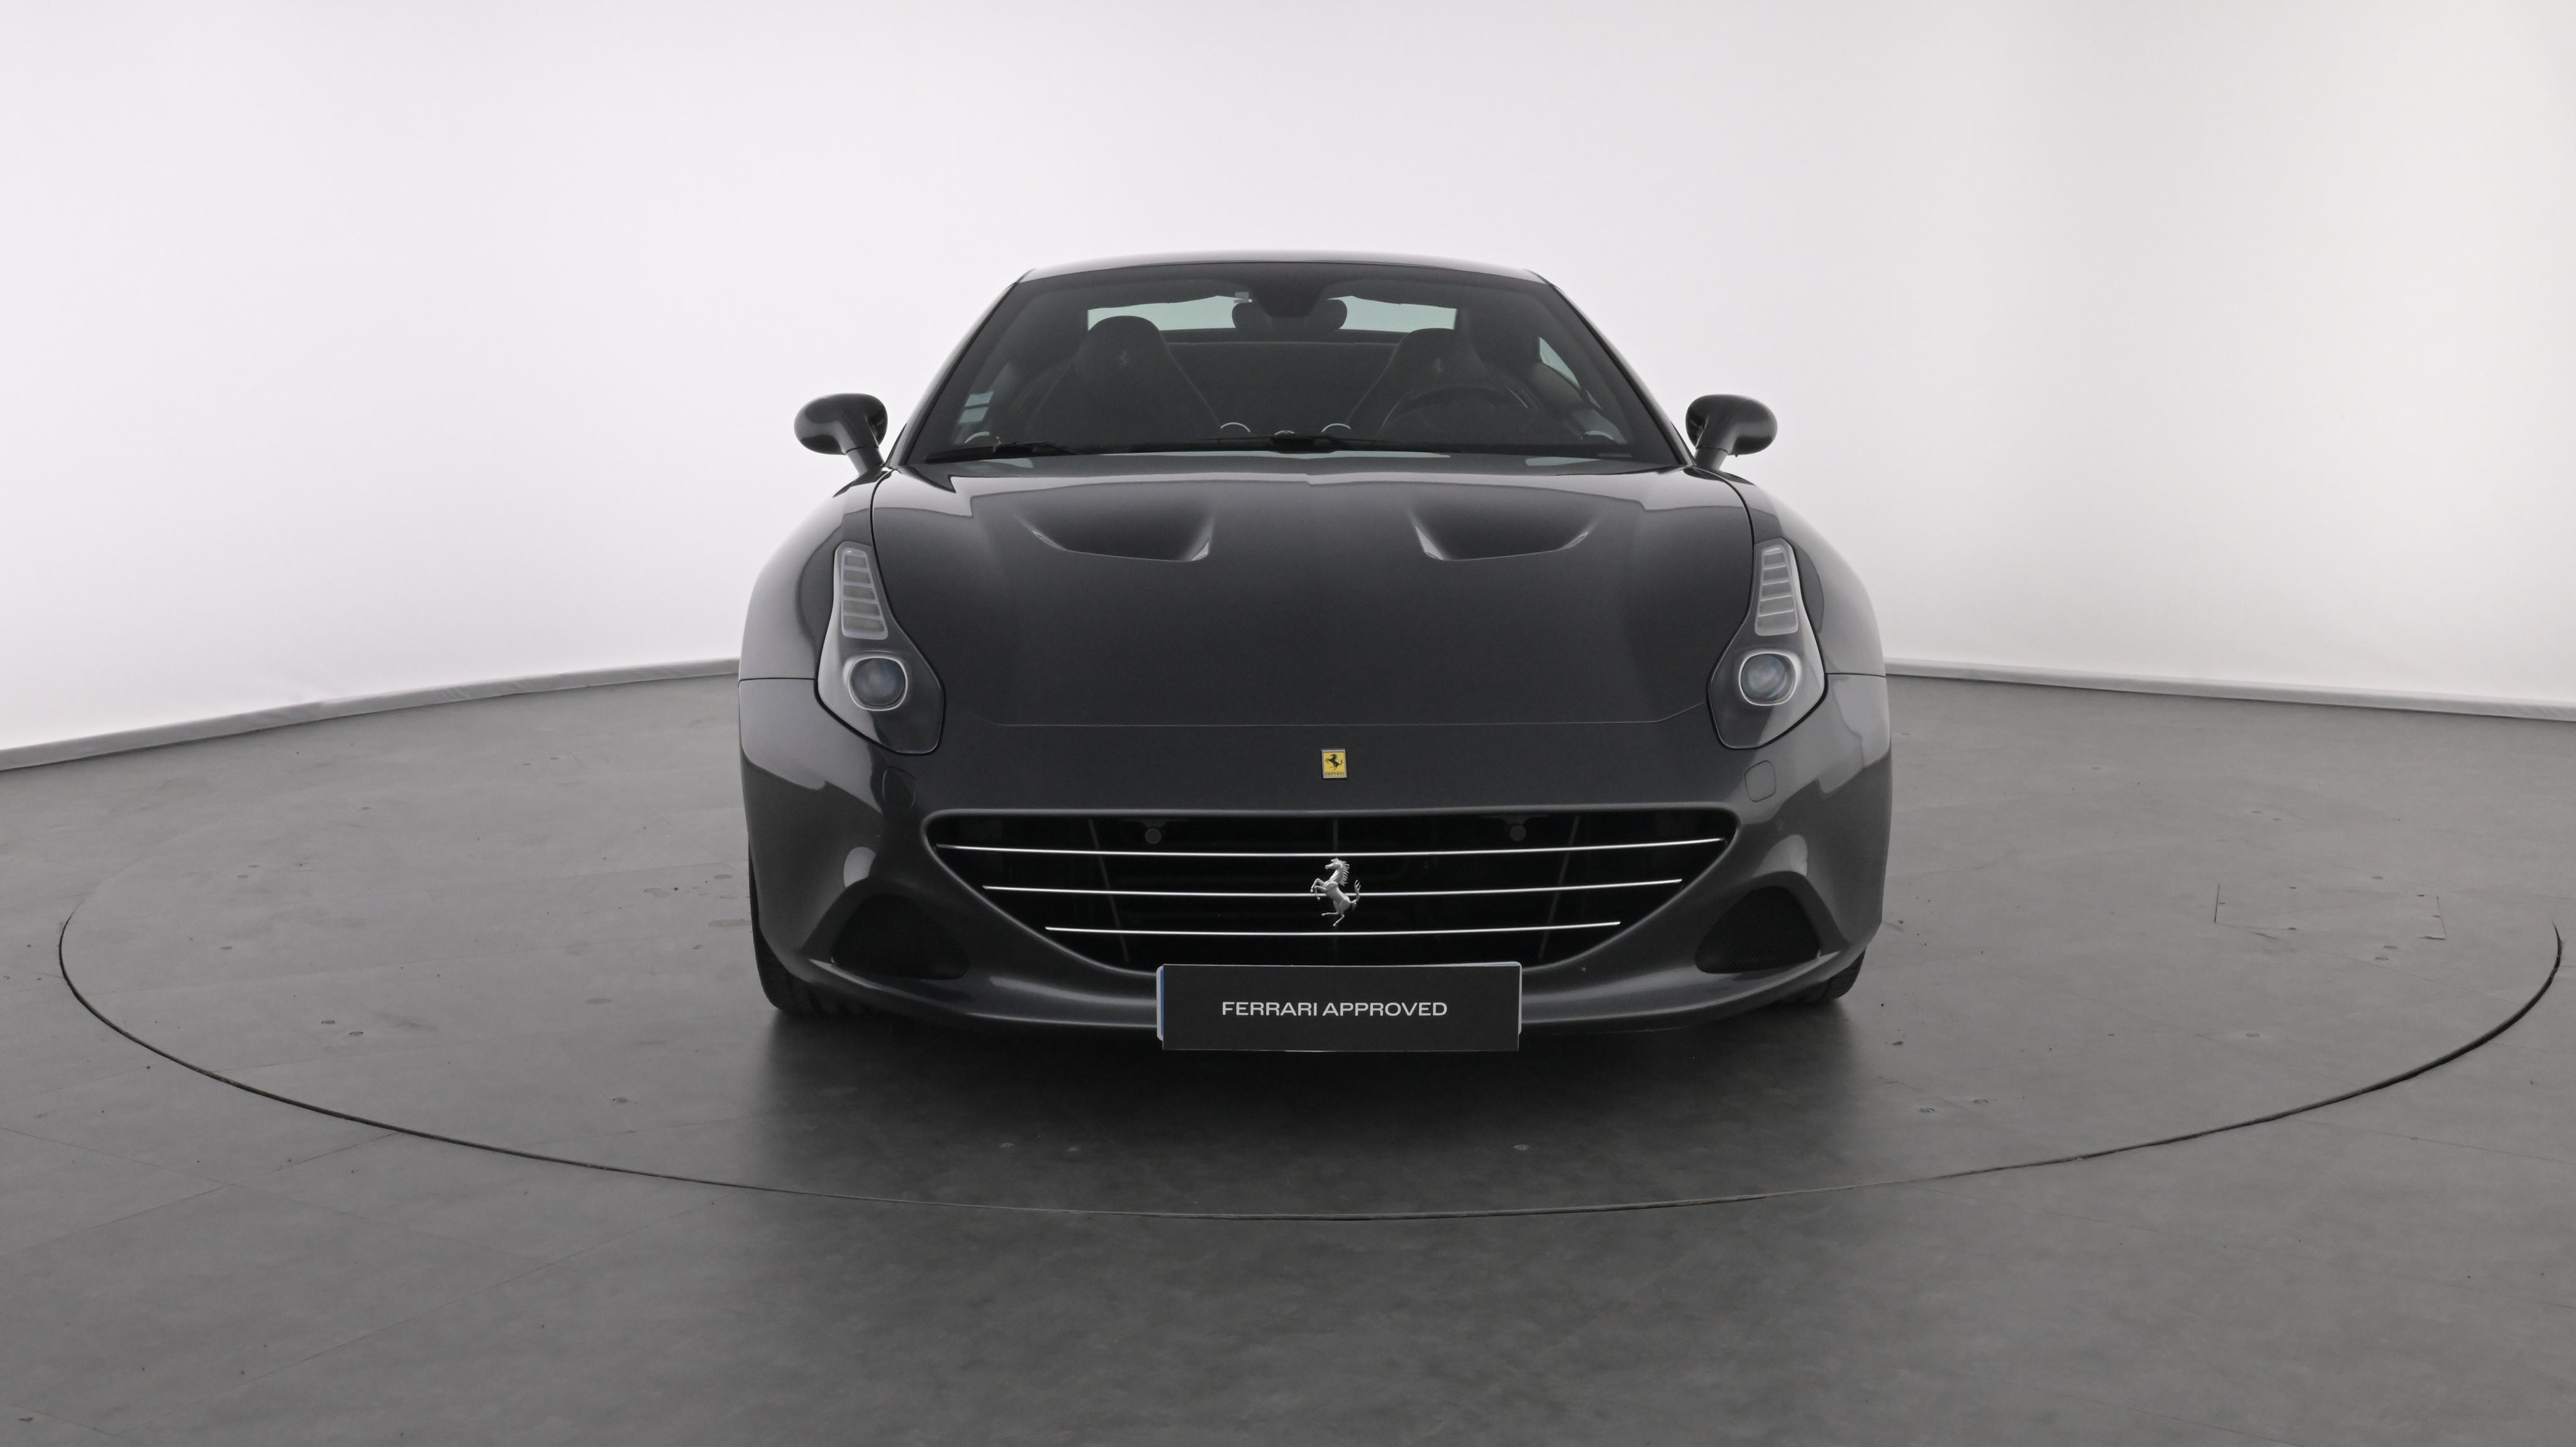 2014 Ferrari California T for Sale in Limonest | Ferrari Approved